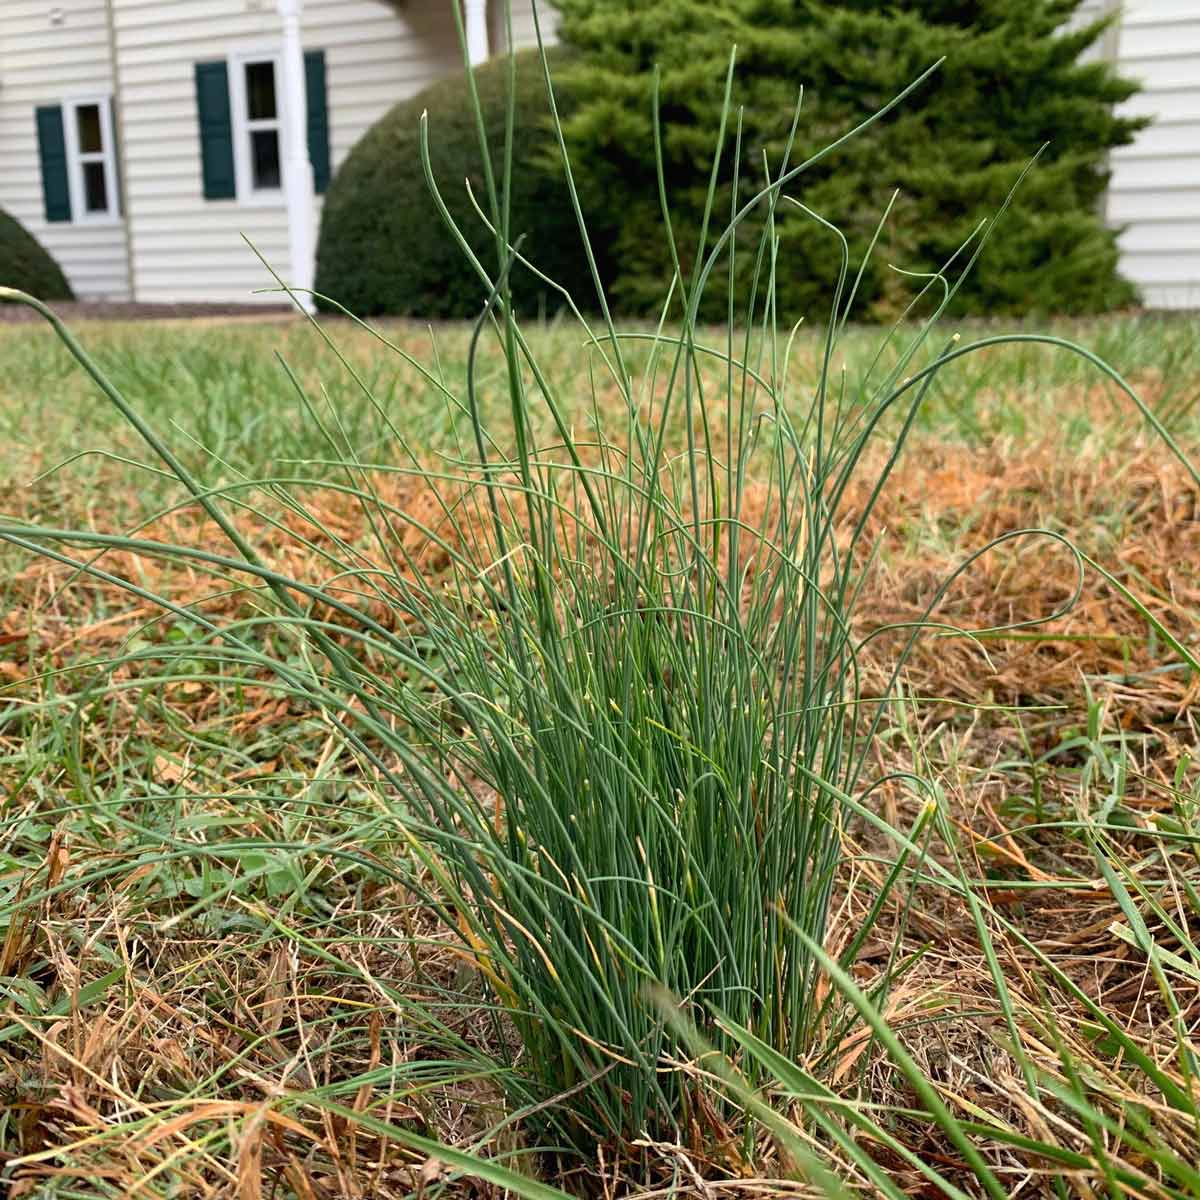 Wild garlic in the lawn